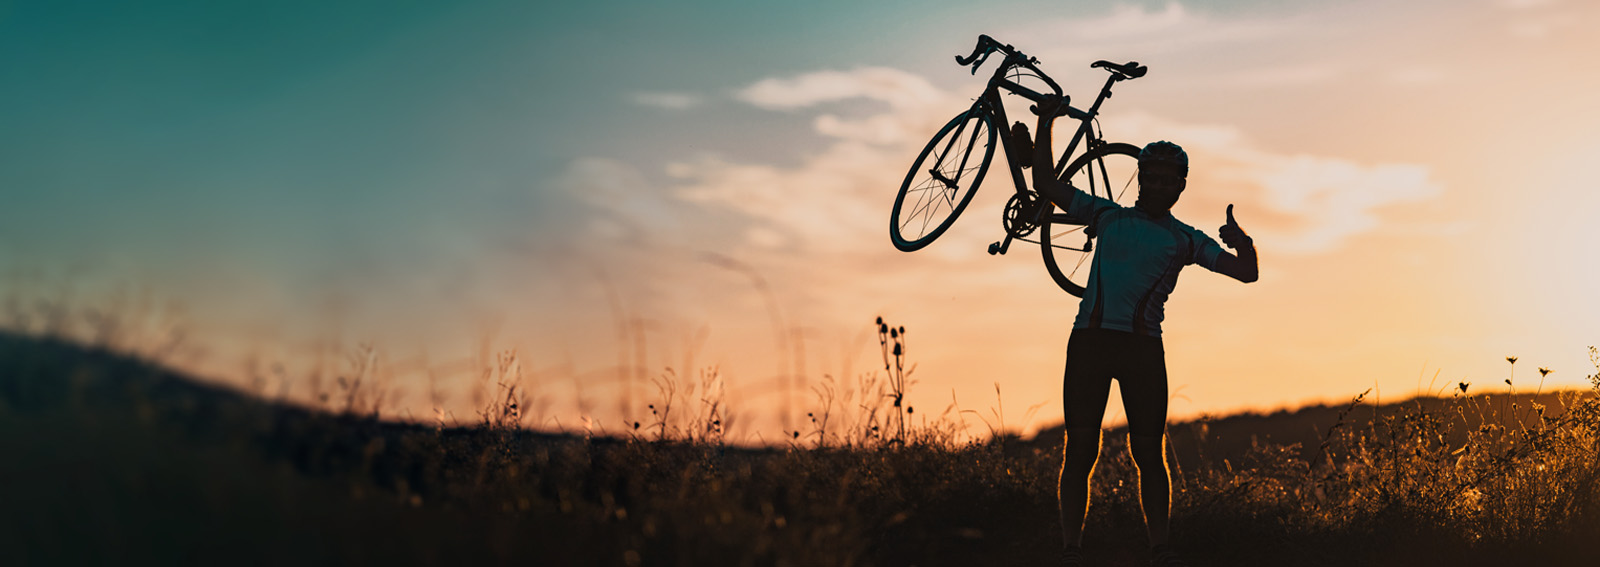 Biker holding up bike with sunset backdrop